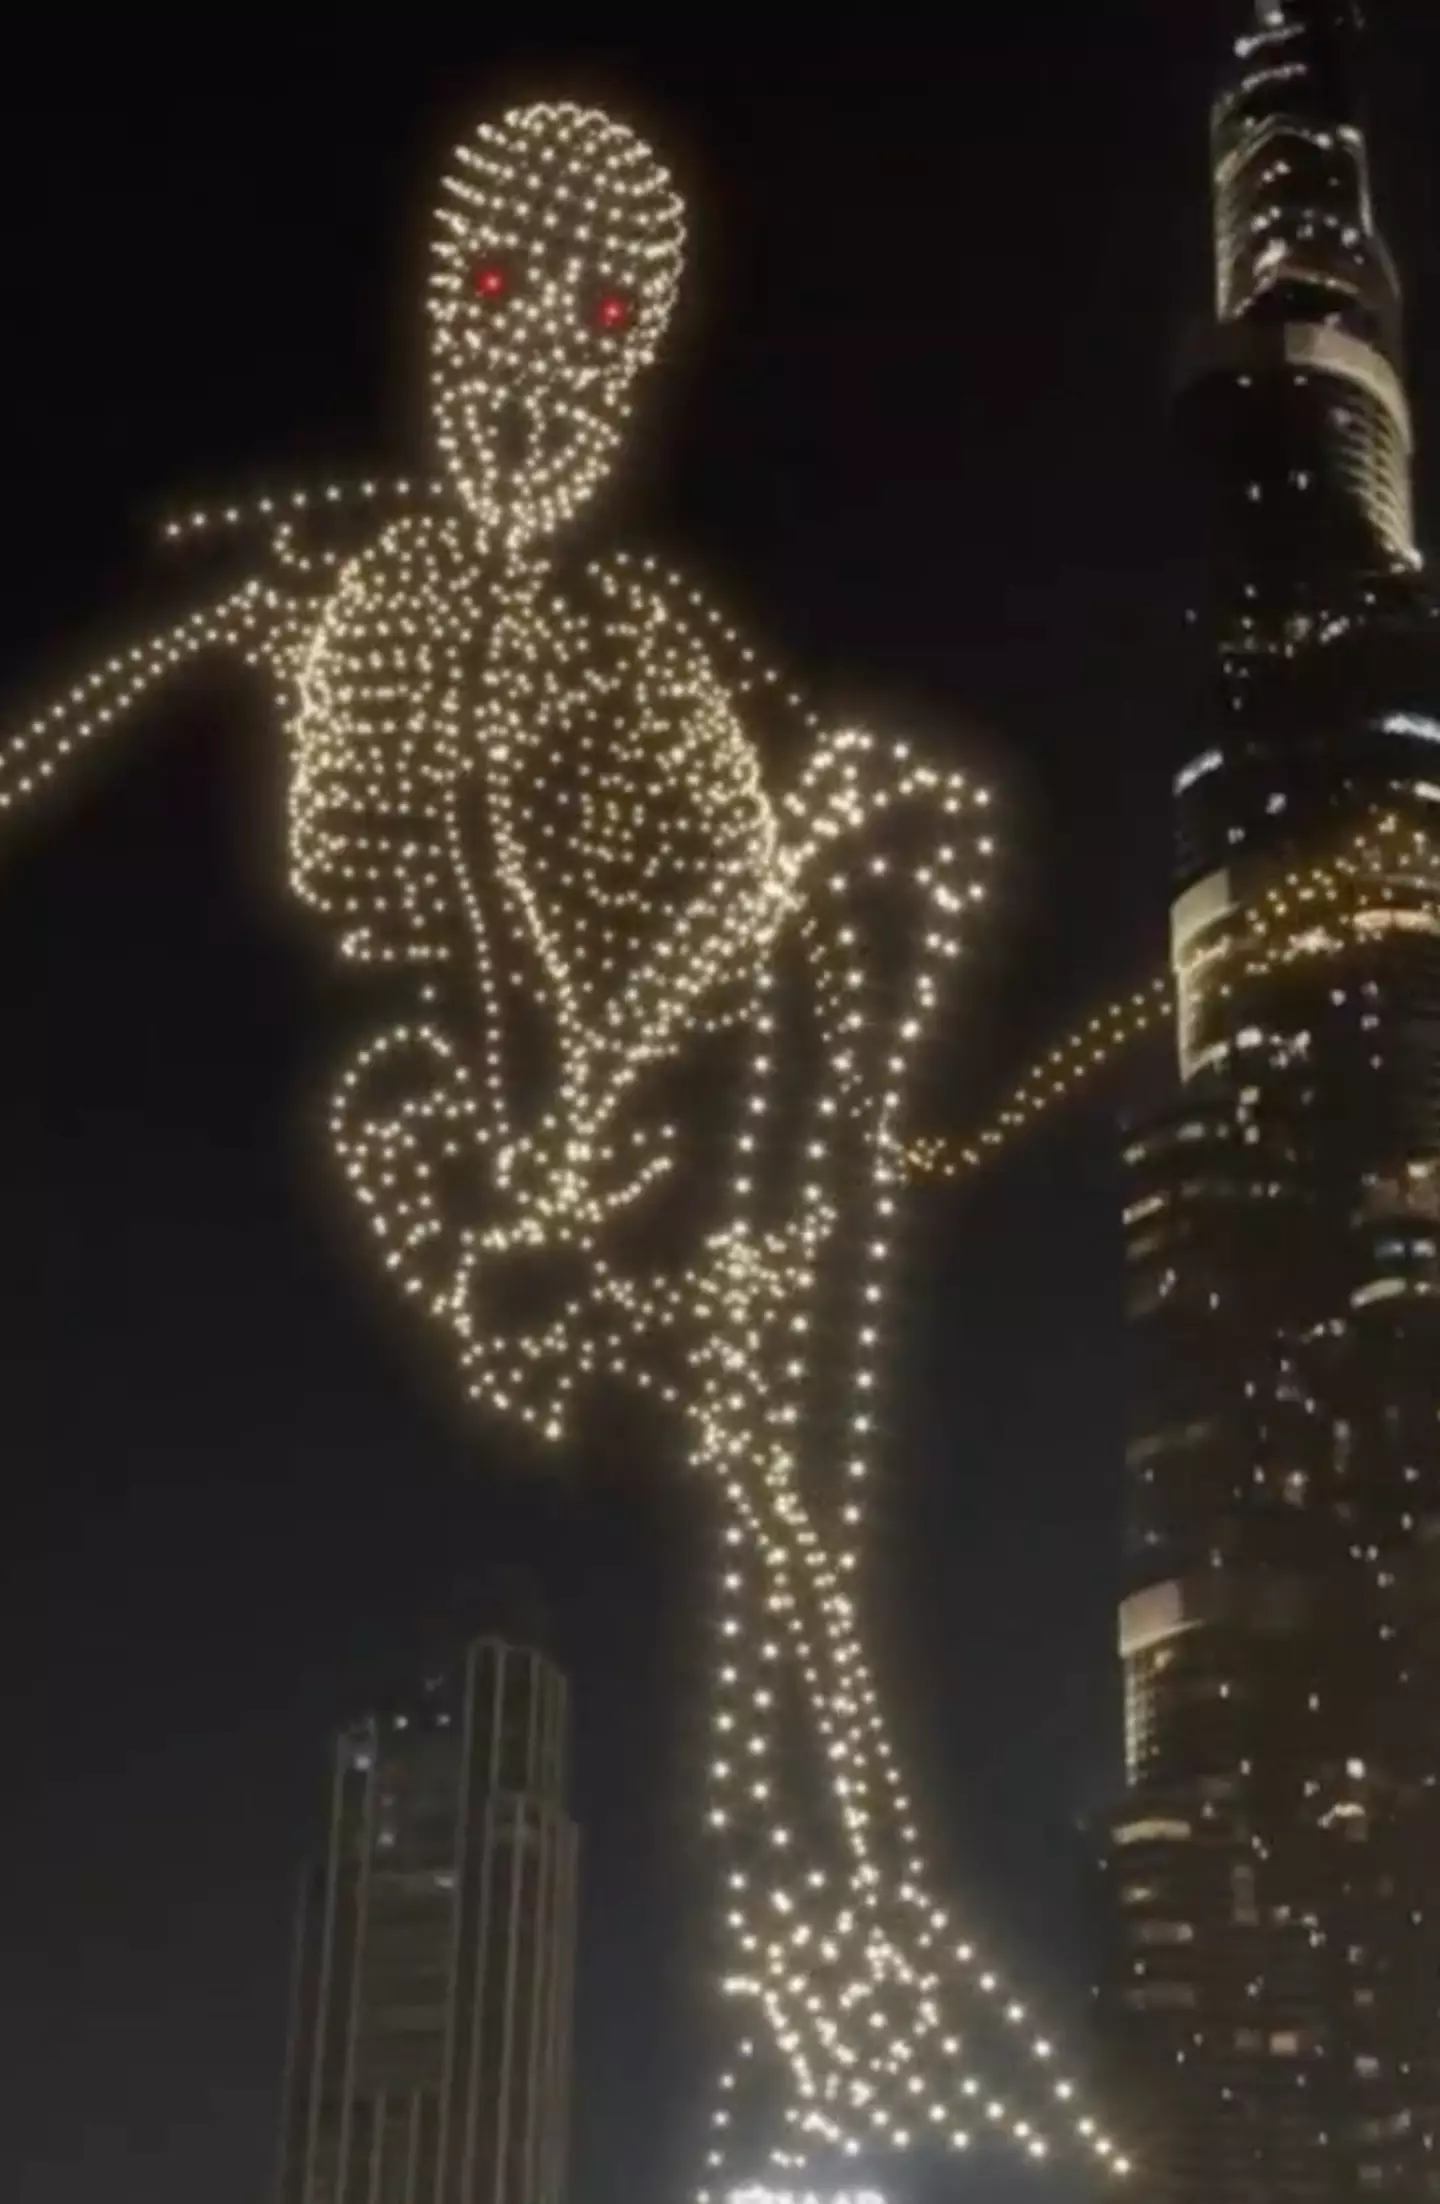 Dubai has received high praise for its Halloween display.